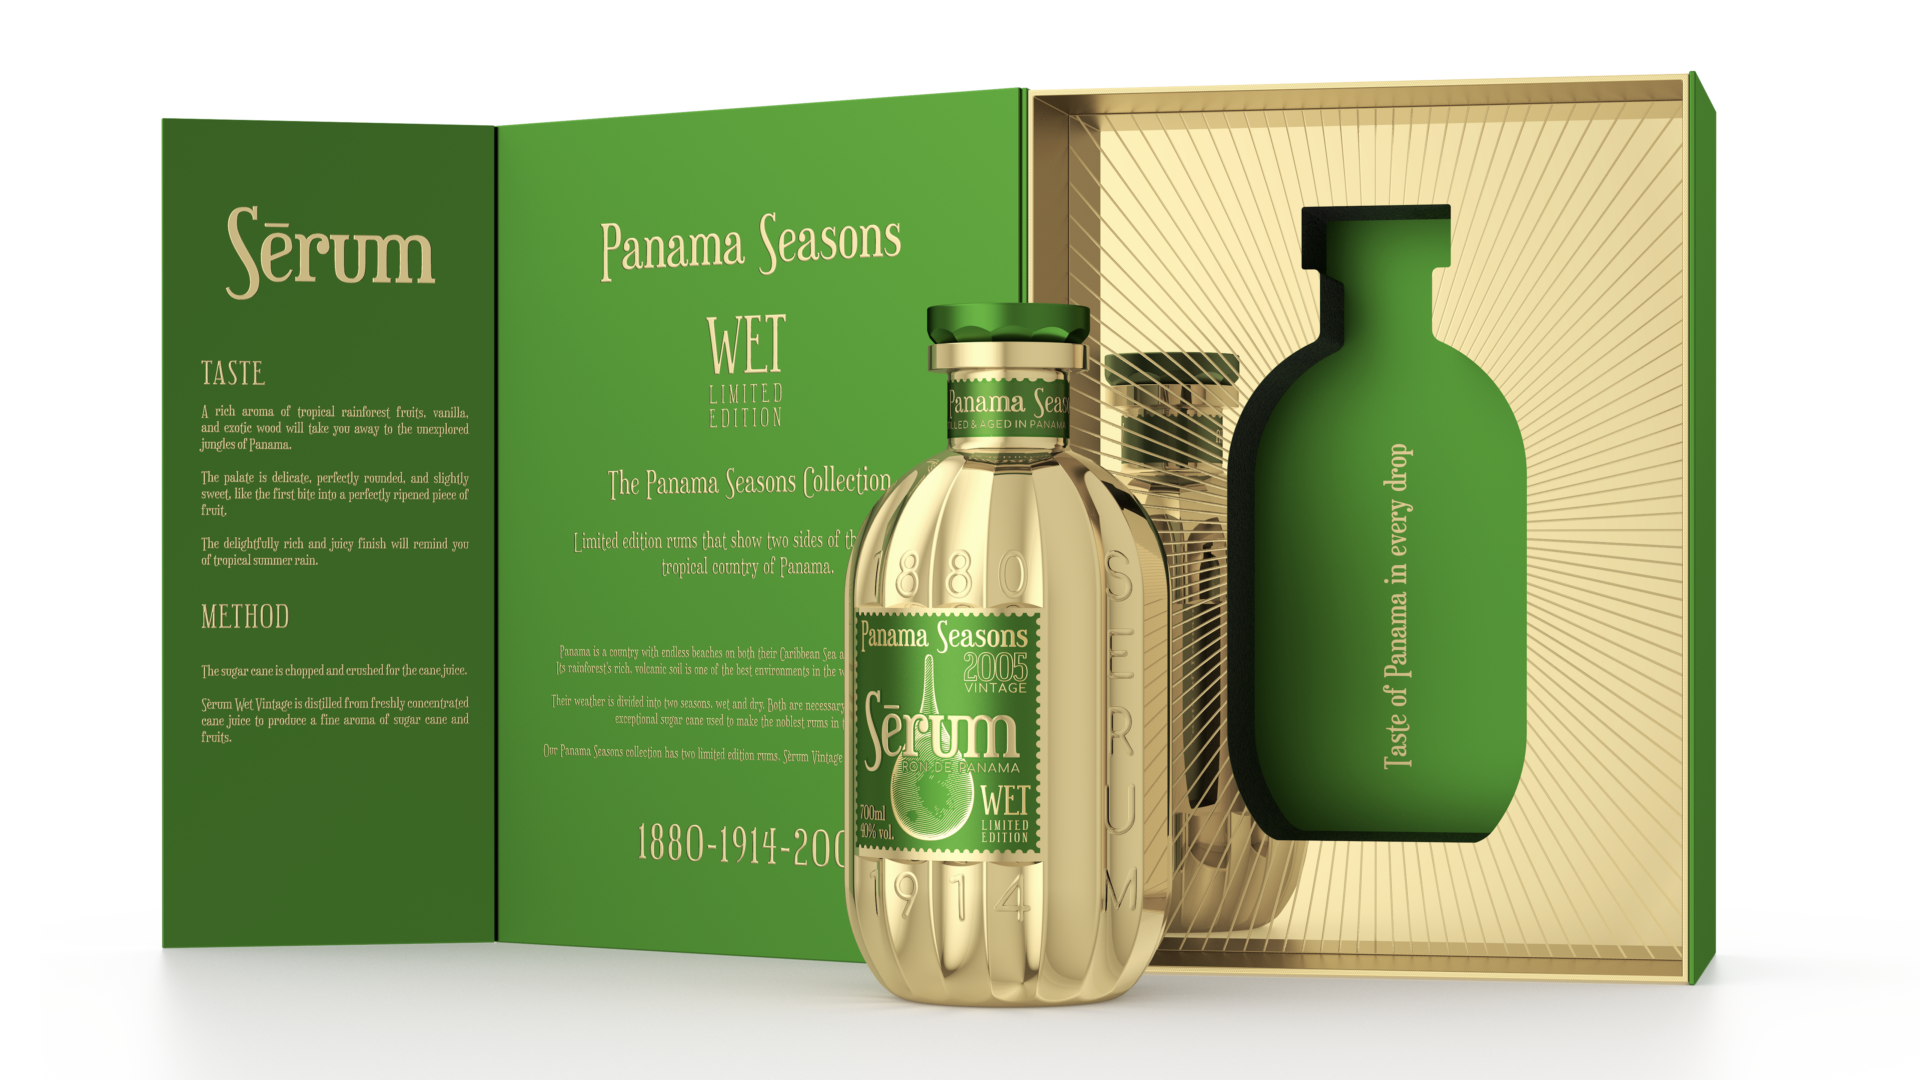 Serum Panama Seasons Wet 2005 40% 0,7l (karton)